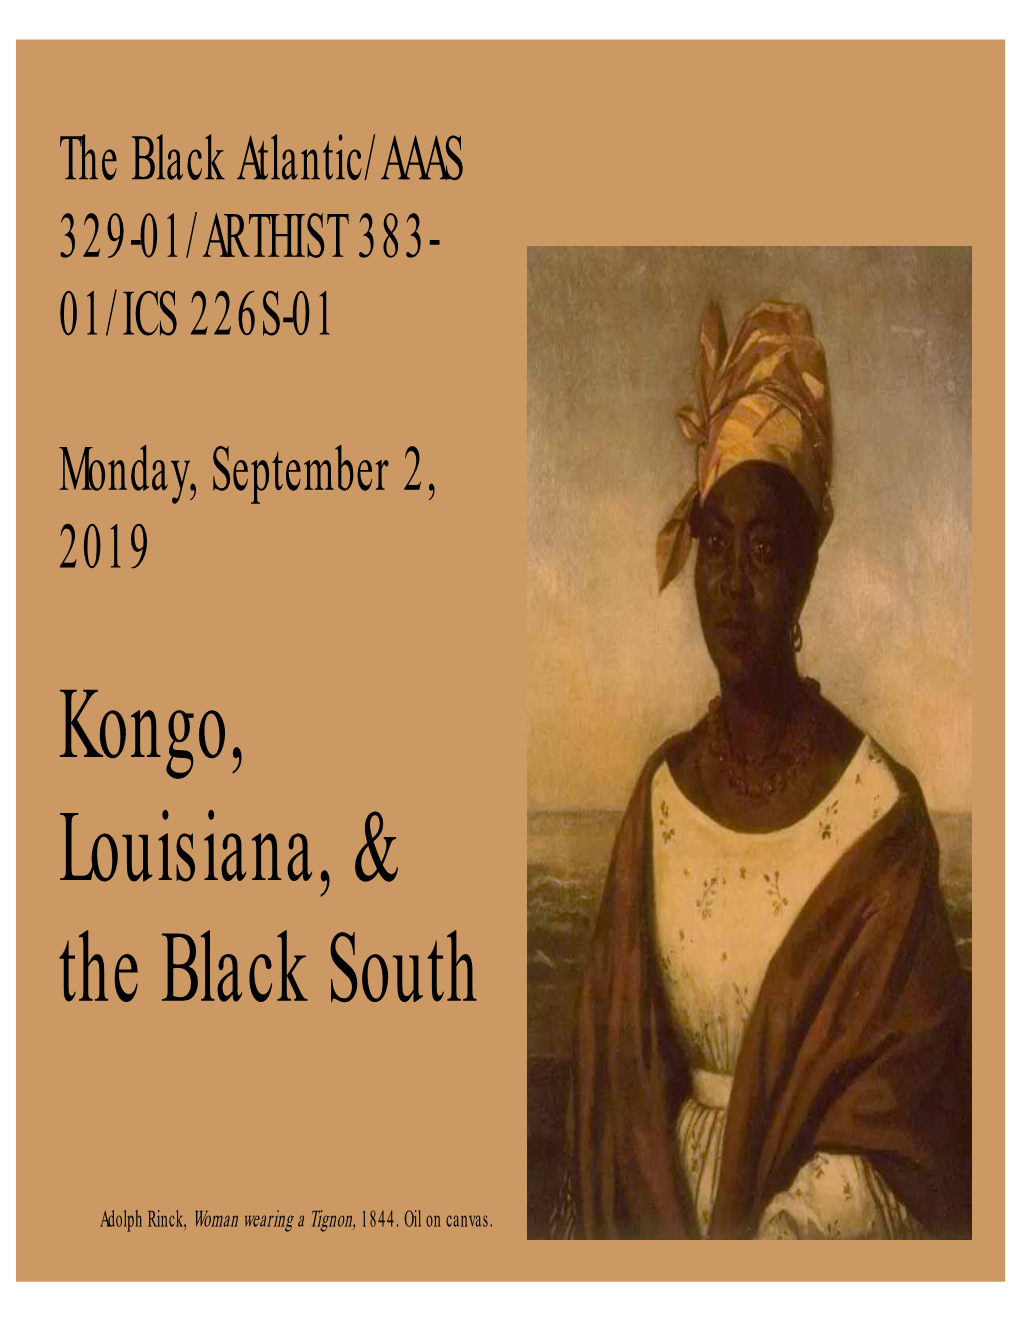 Kongo, Louisiana, & the Black South